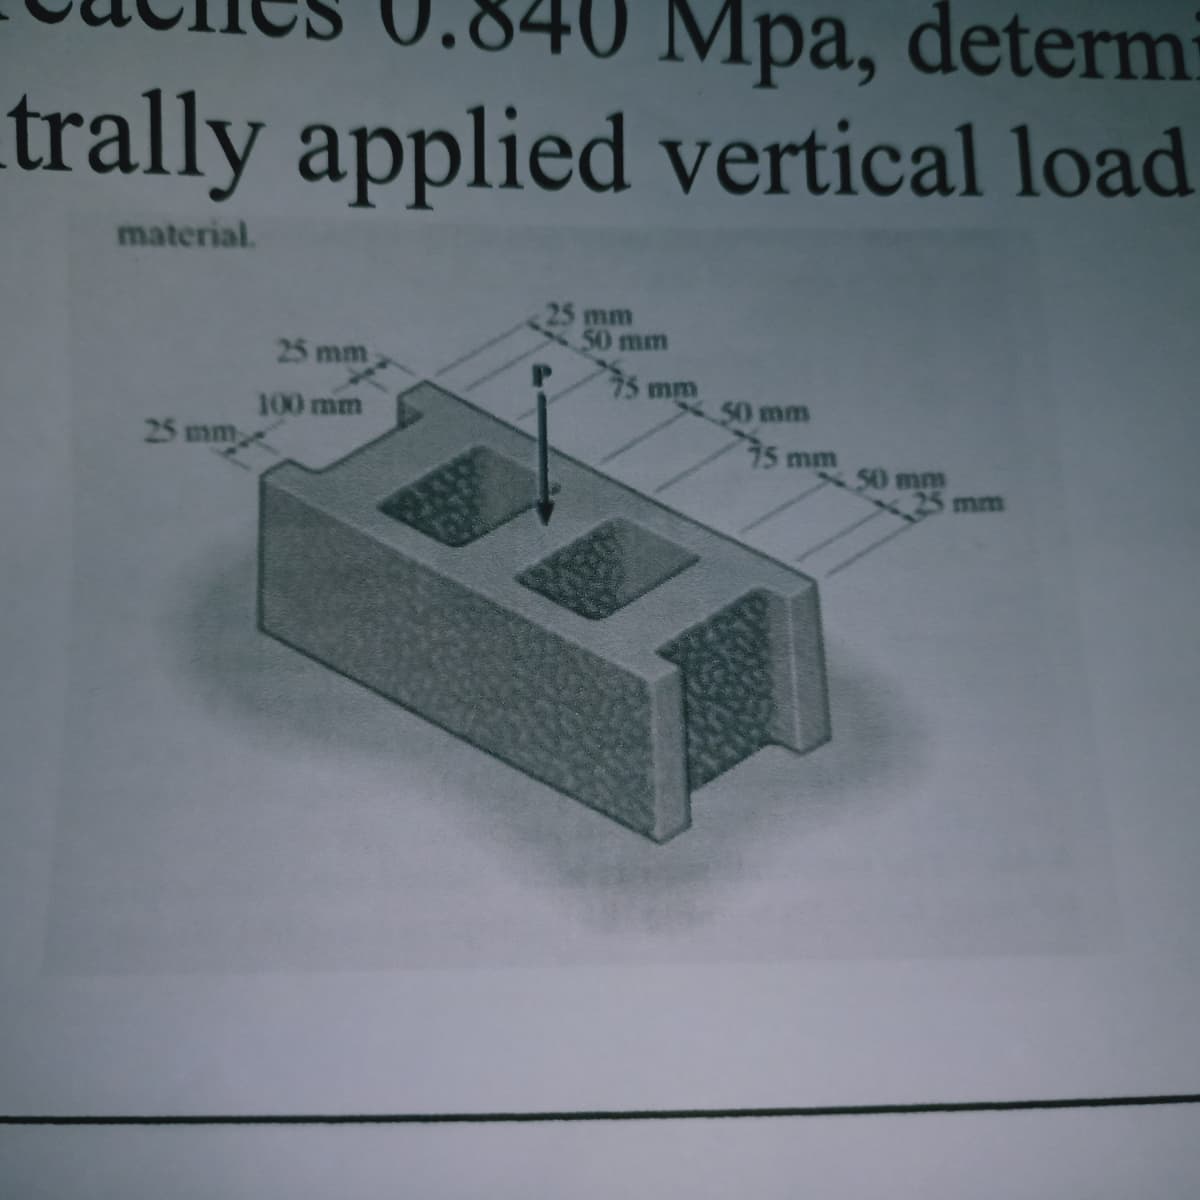 Mpa, determi
trally applied vertical load
material.
mm
50 mm
25 mm
75 mm
100 mm
50 mm
25 mm
75 mm
X50mm
25 mm
